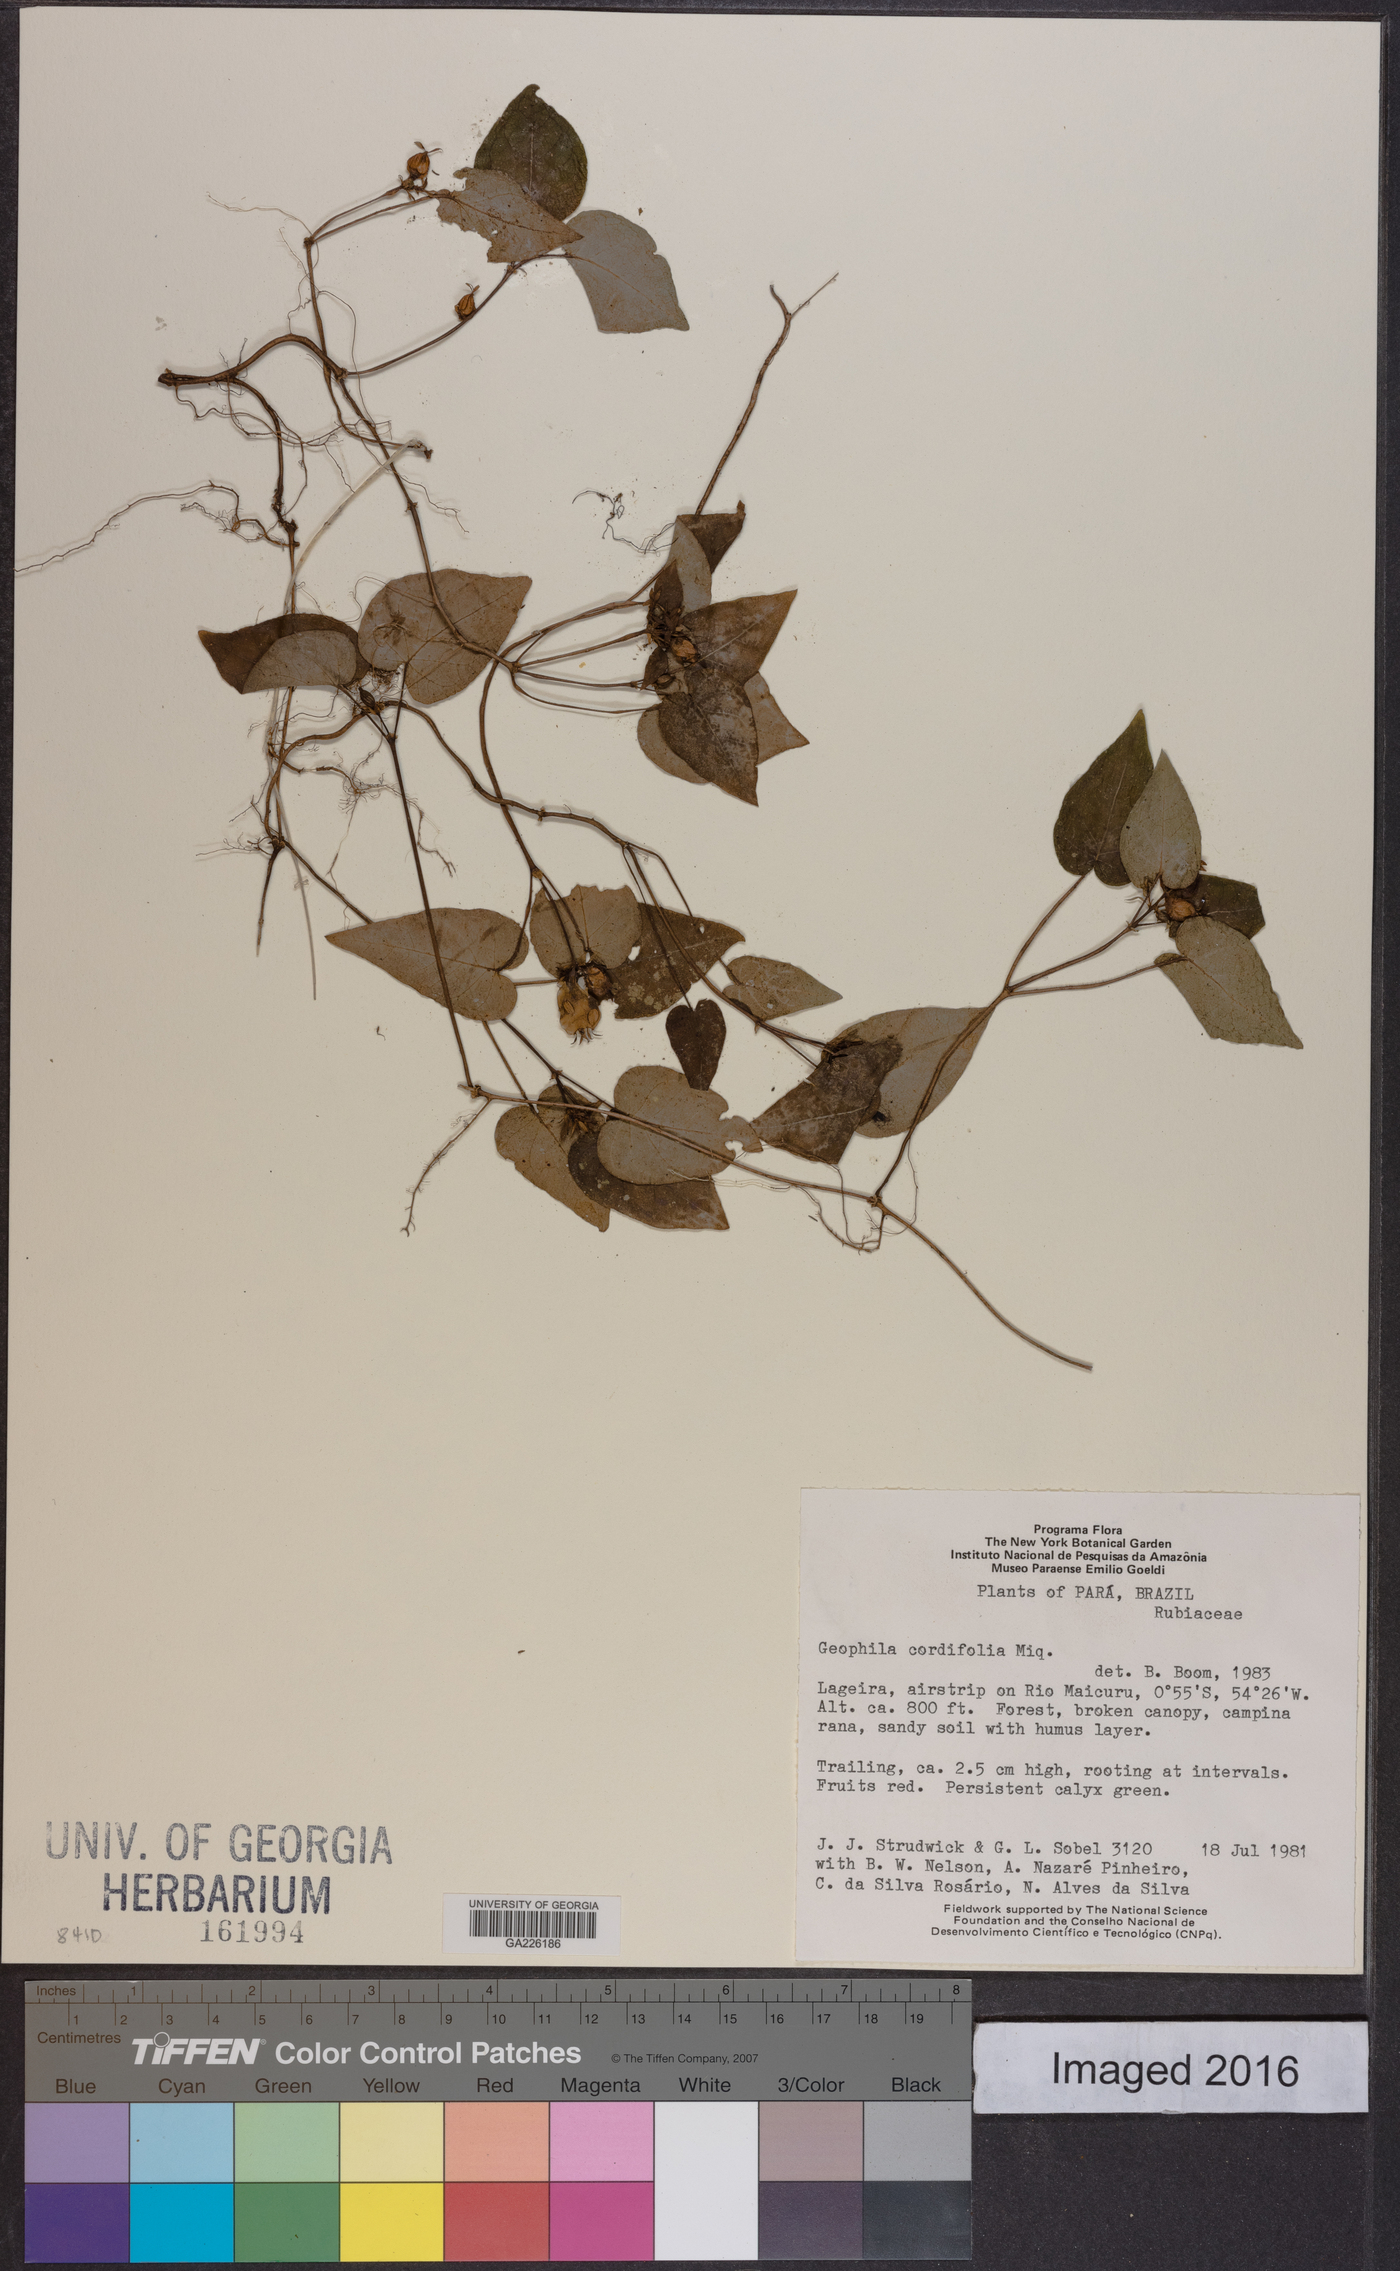 Geophila cordifolia image